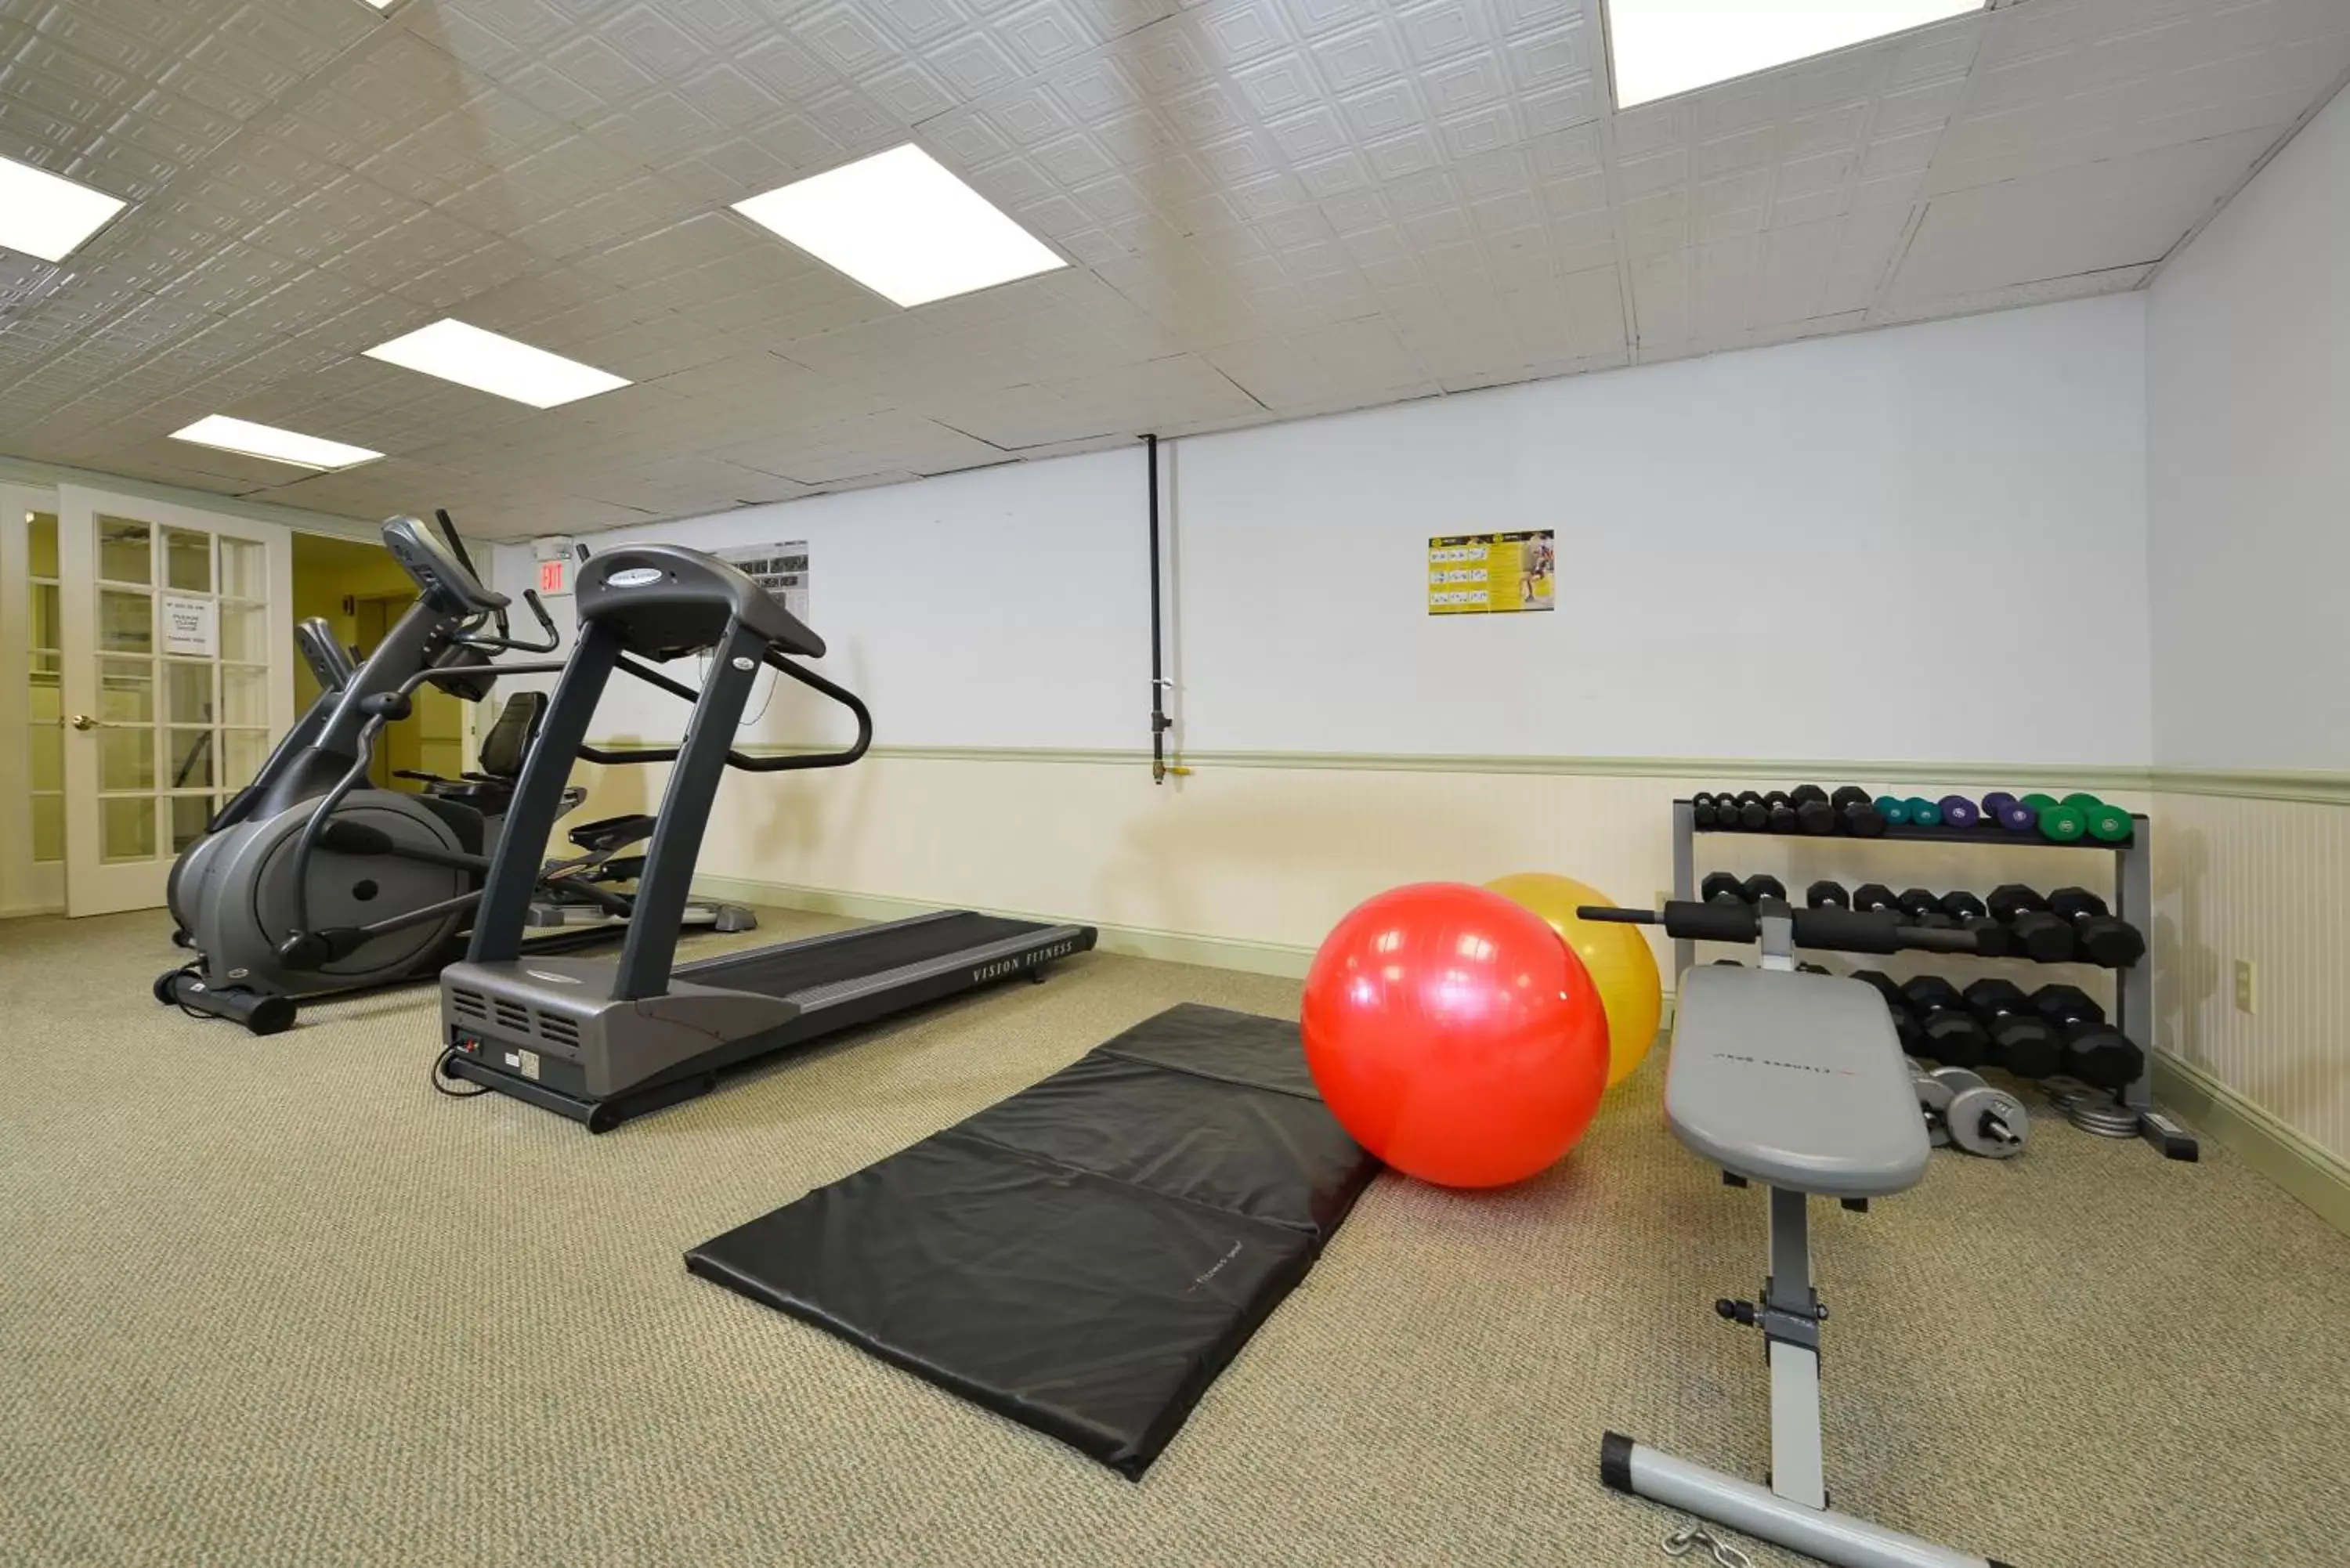 Fitness centre/facilities, Fitness Center/Facilities in Bar Harbor Grand Hotel